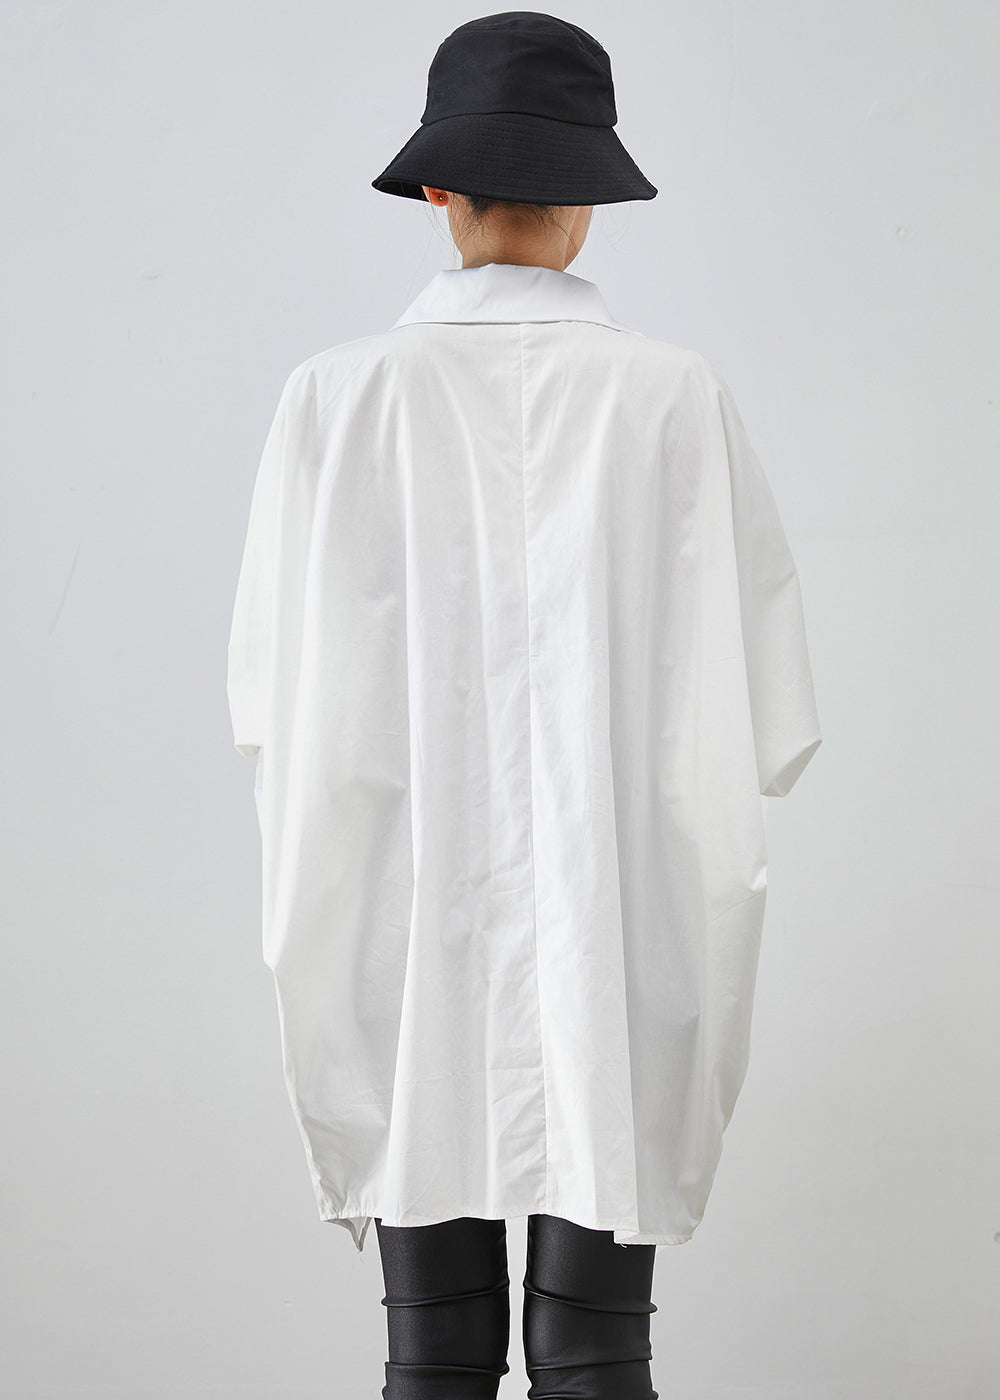 White Oversized Cotton Blouse Top Asymmetrical Fall